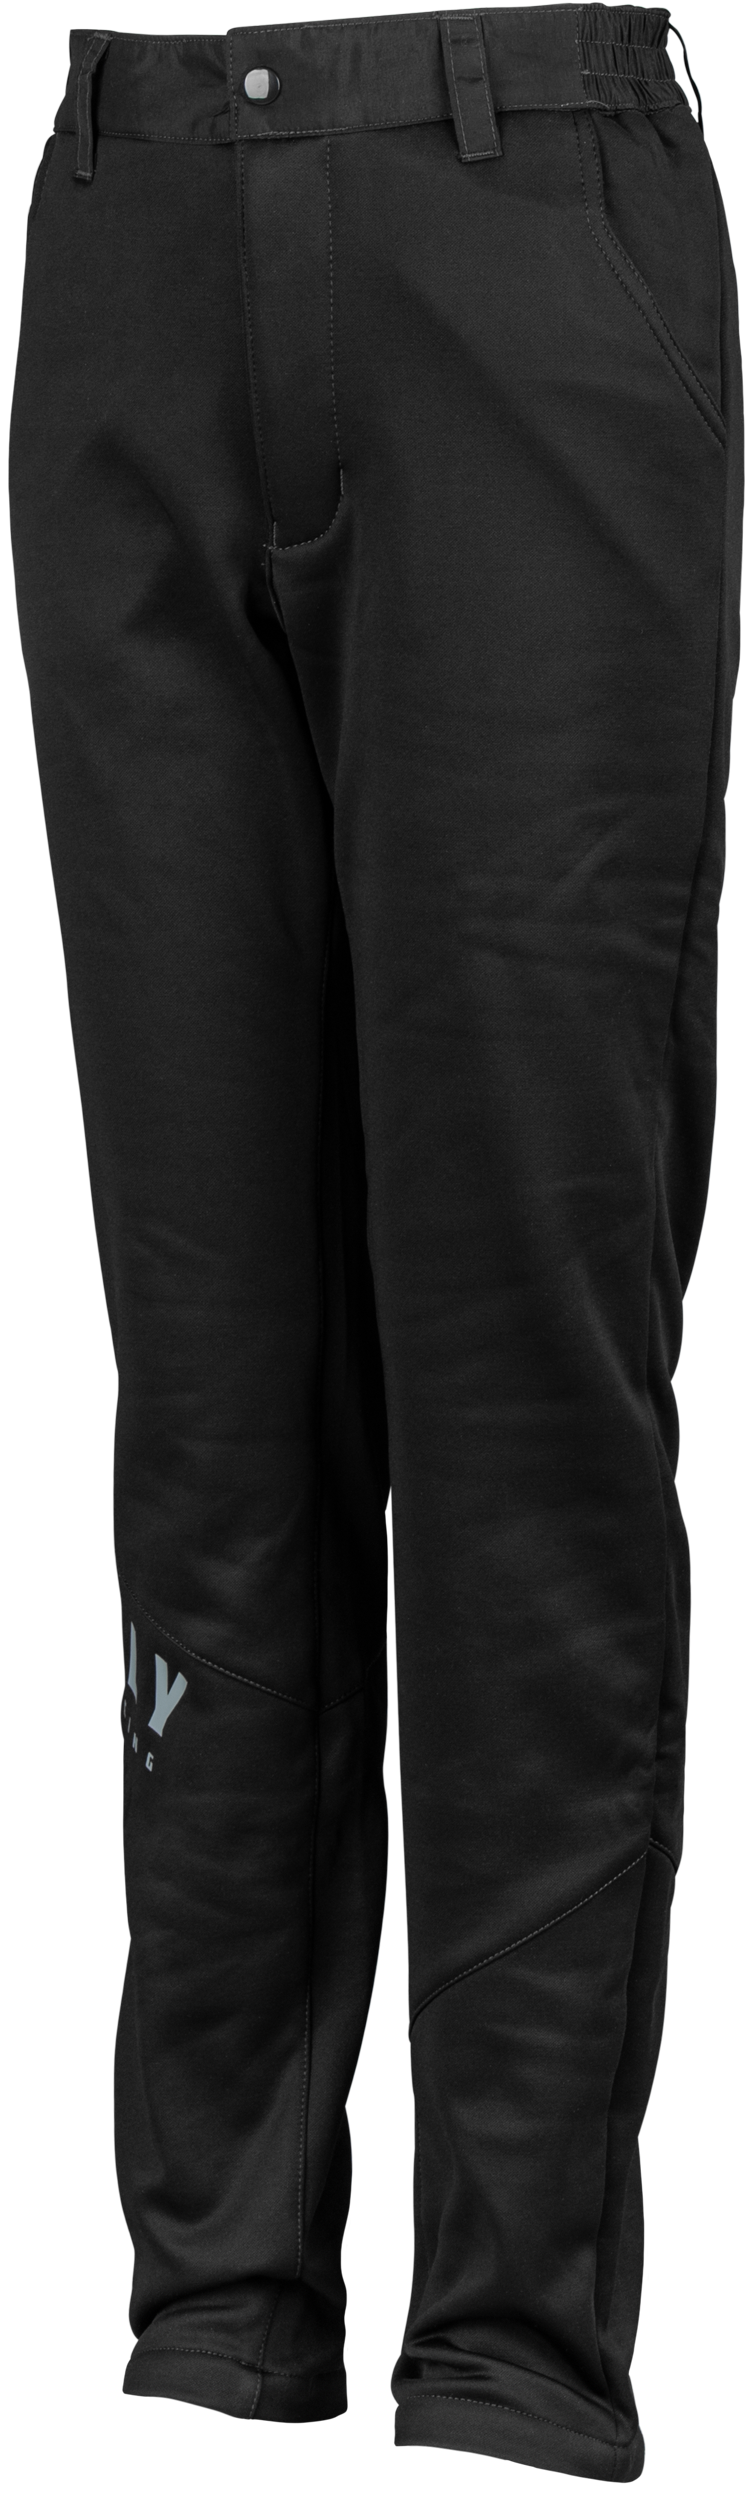 FLY RACING Women's Mid-Layer Pants Black Lg 354-6347L